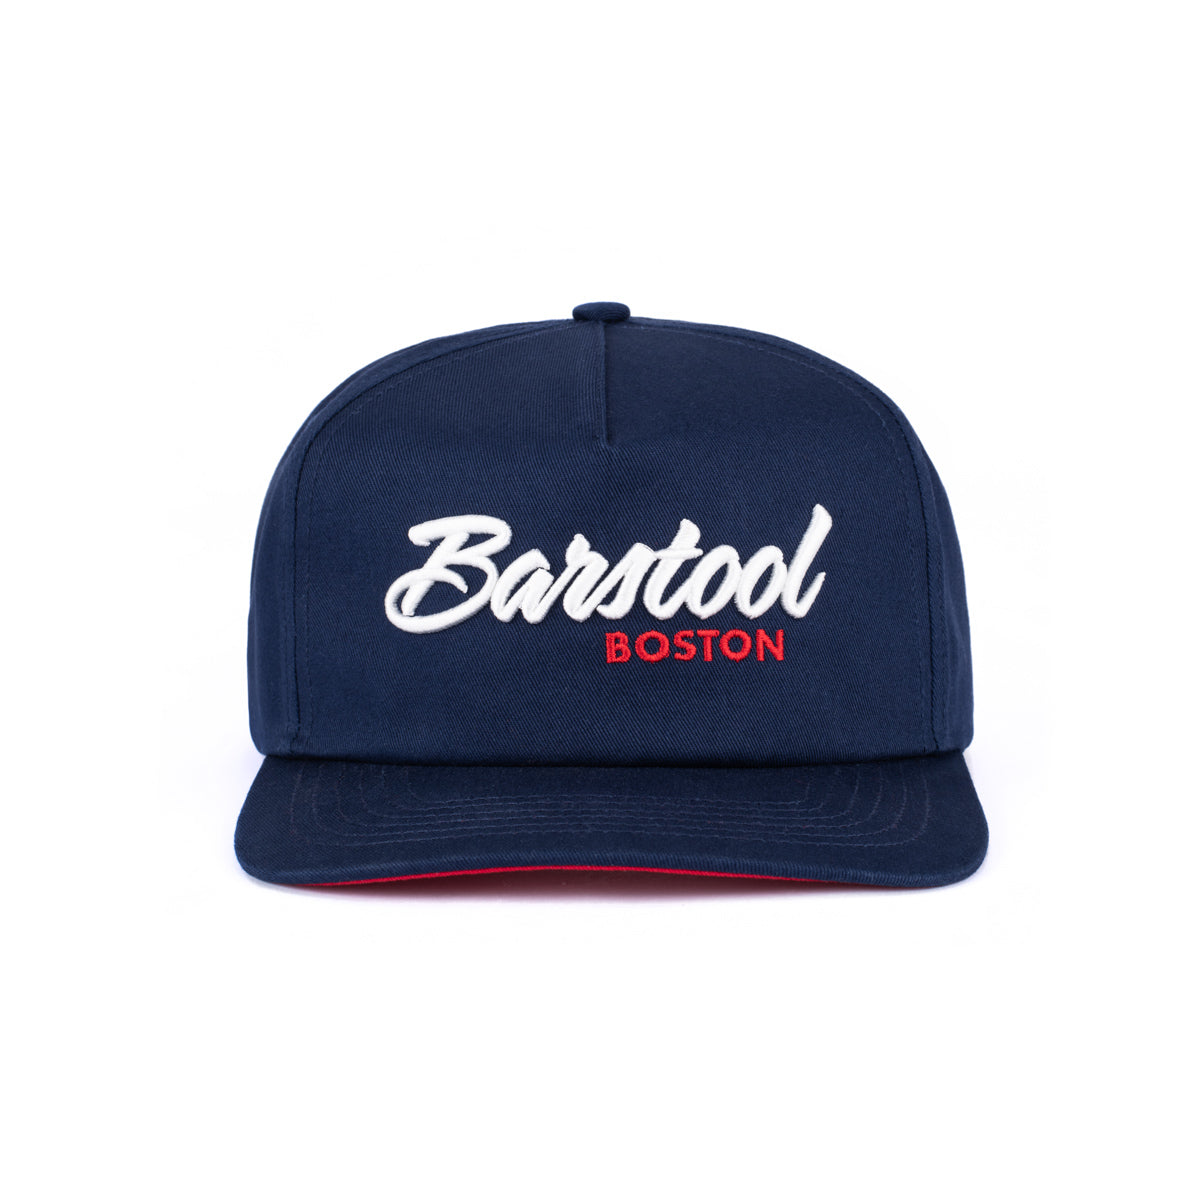 Barstool Boston Retro Snapback Hat-Hats-Barstool Sports-Navy-One Size-Barstool Sports